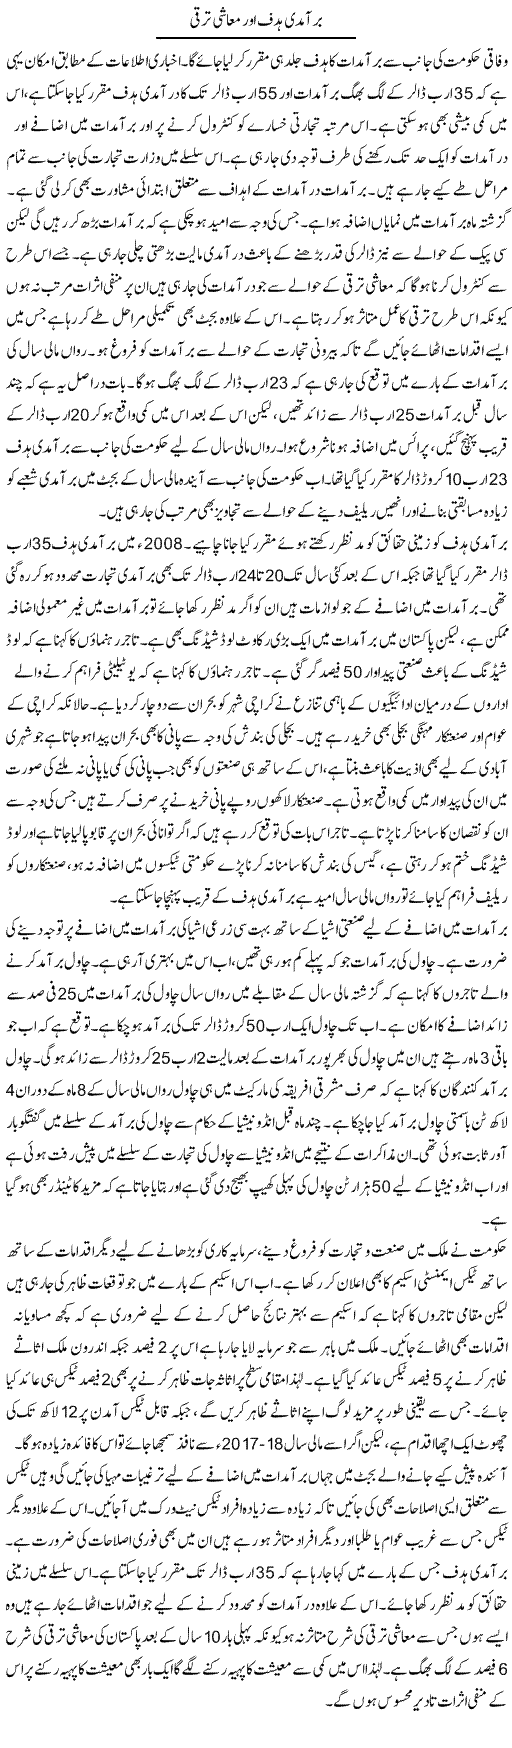 Braamdi Hadaf Aur Muashi Taraqqi | M.I Khalil | Daily Urdu Columns